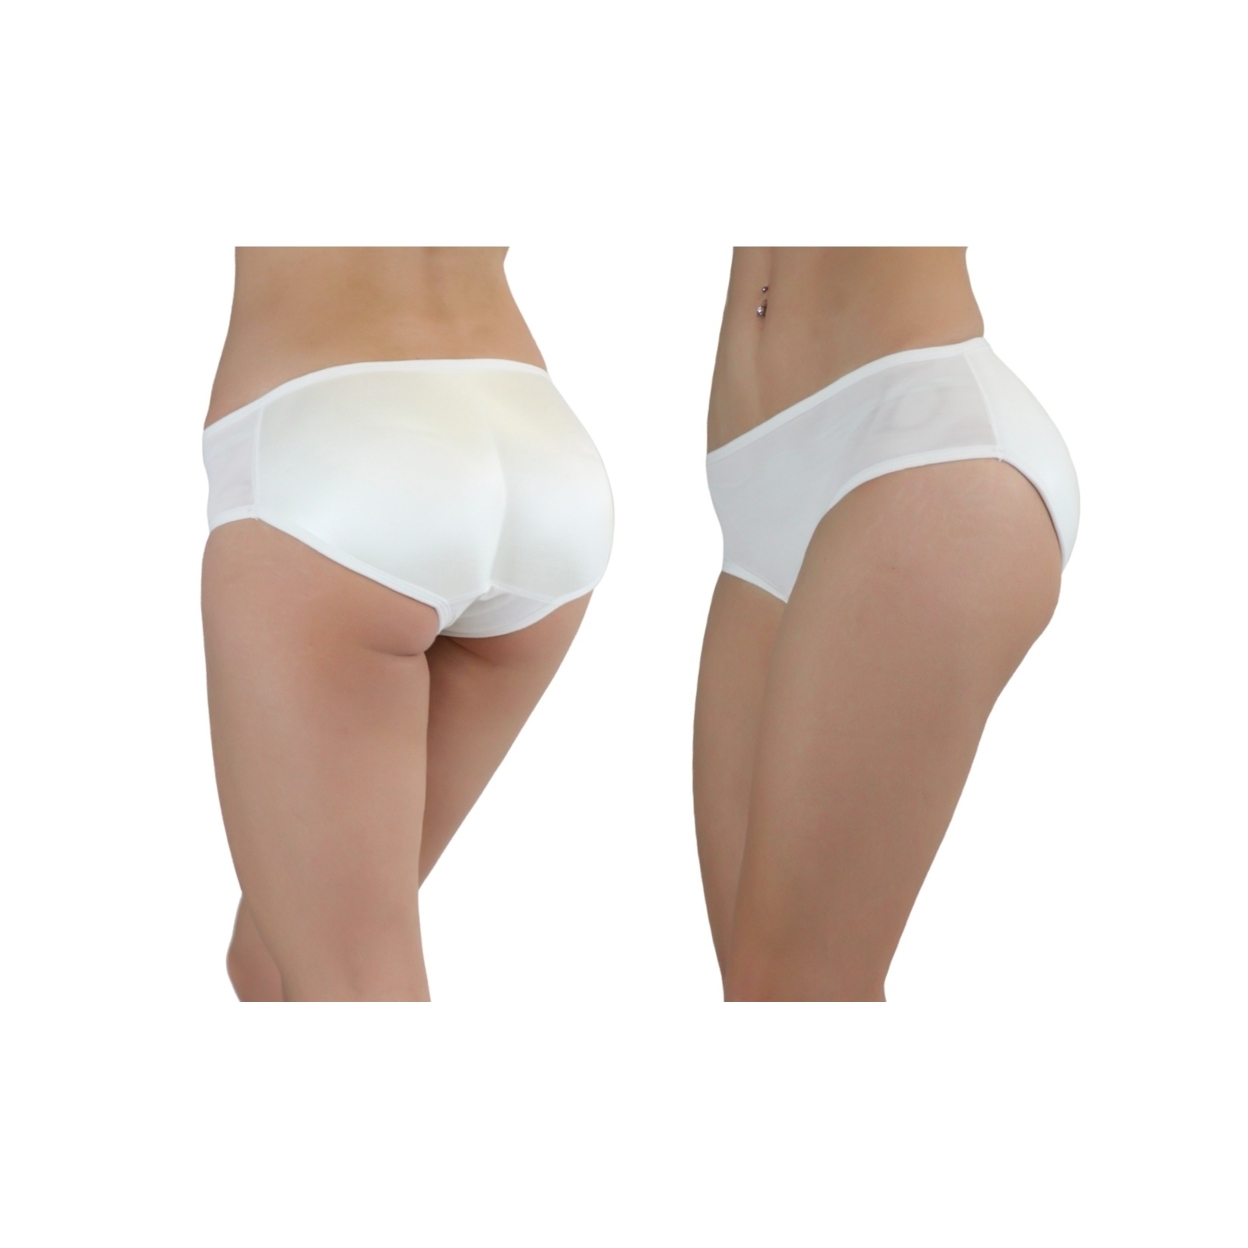 Women's Low-Rise Padded Panties - White, S